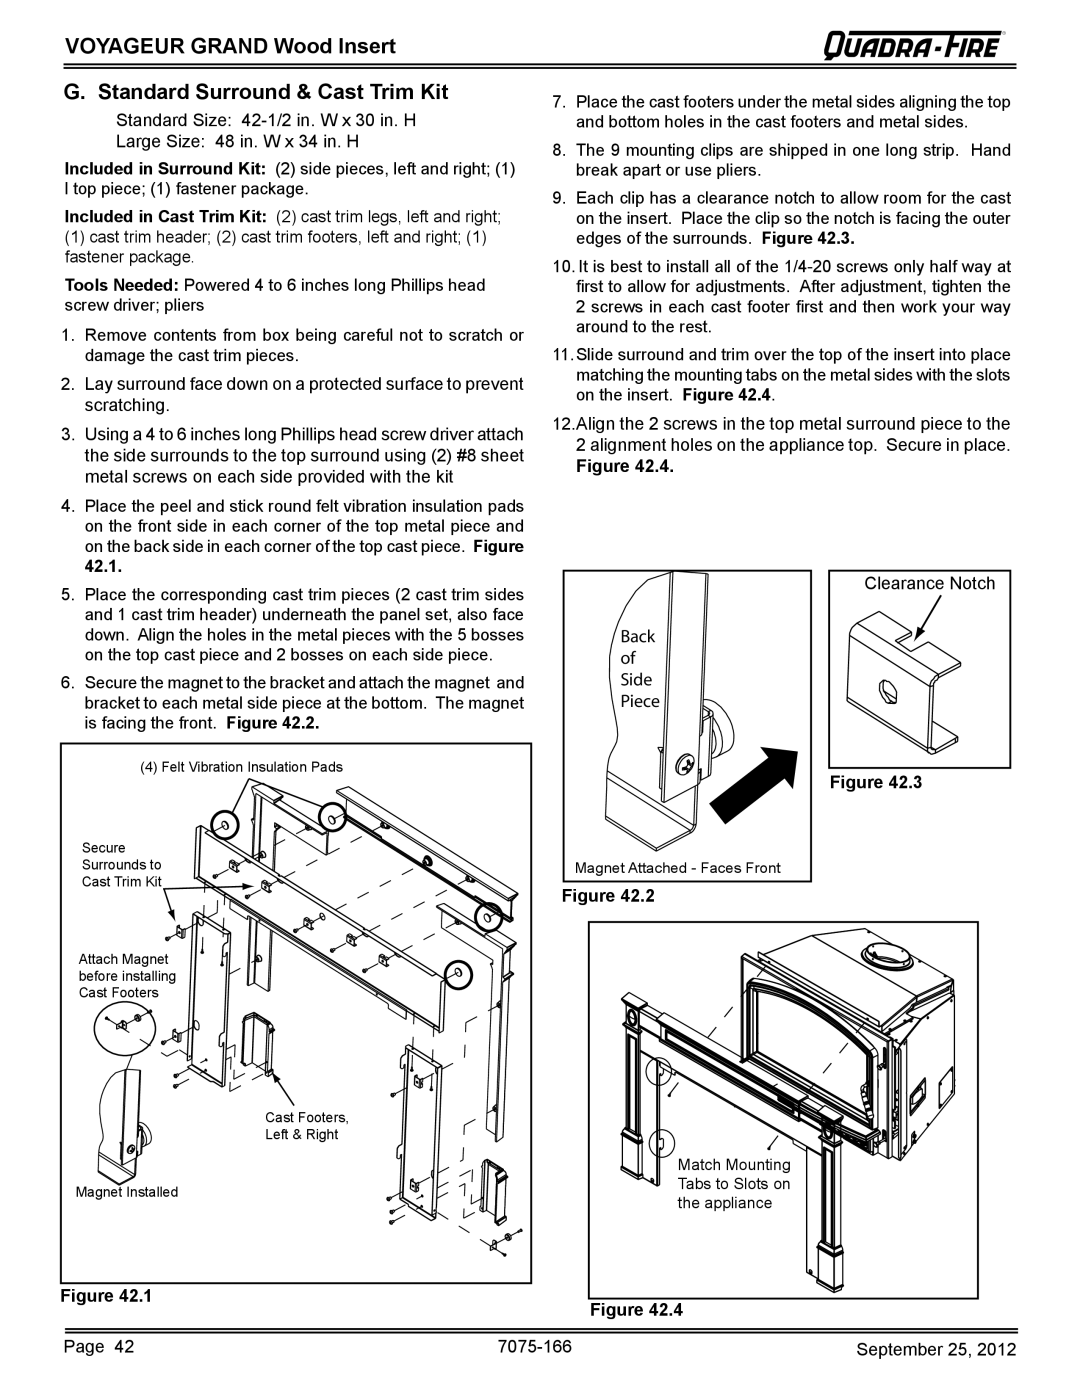 Radware VOYA-GRAND-MBK G. Standard Surround & Cast Trim Kit, VOYAGEUR GRAND Wood Insert, Back, Side, Piece, 42.1 